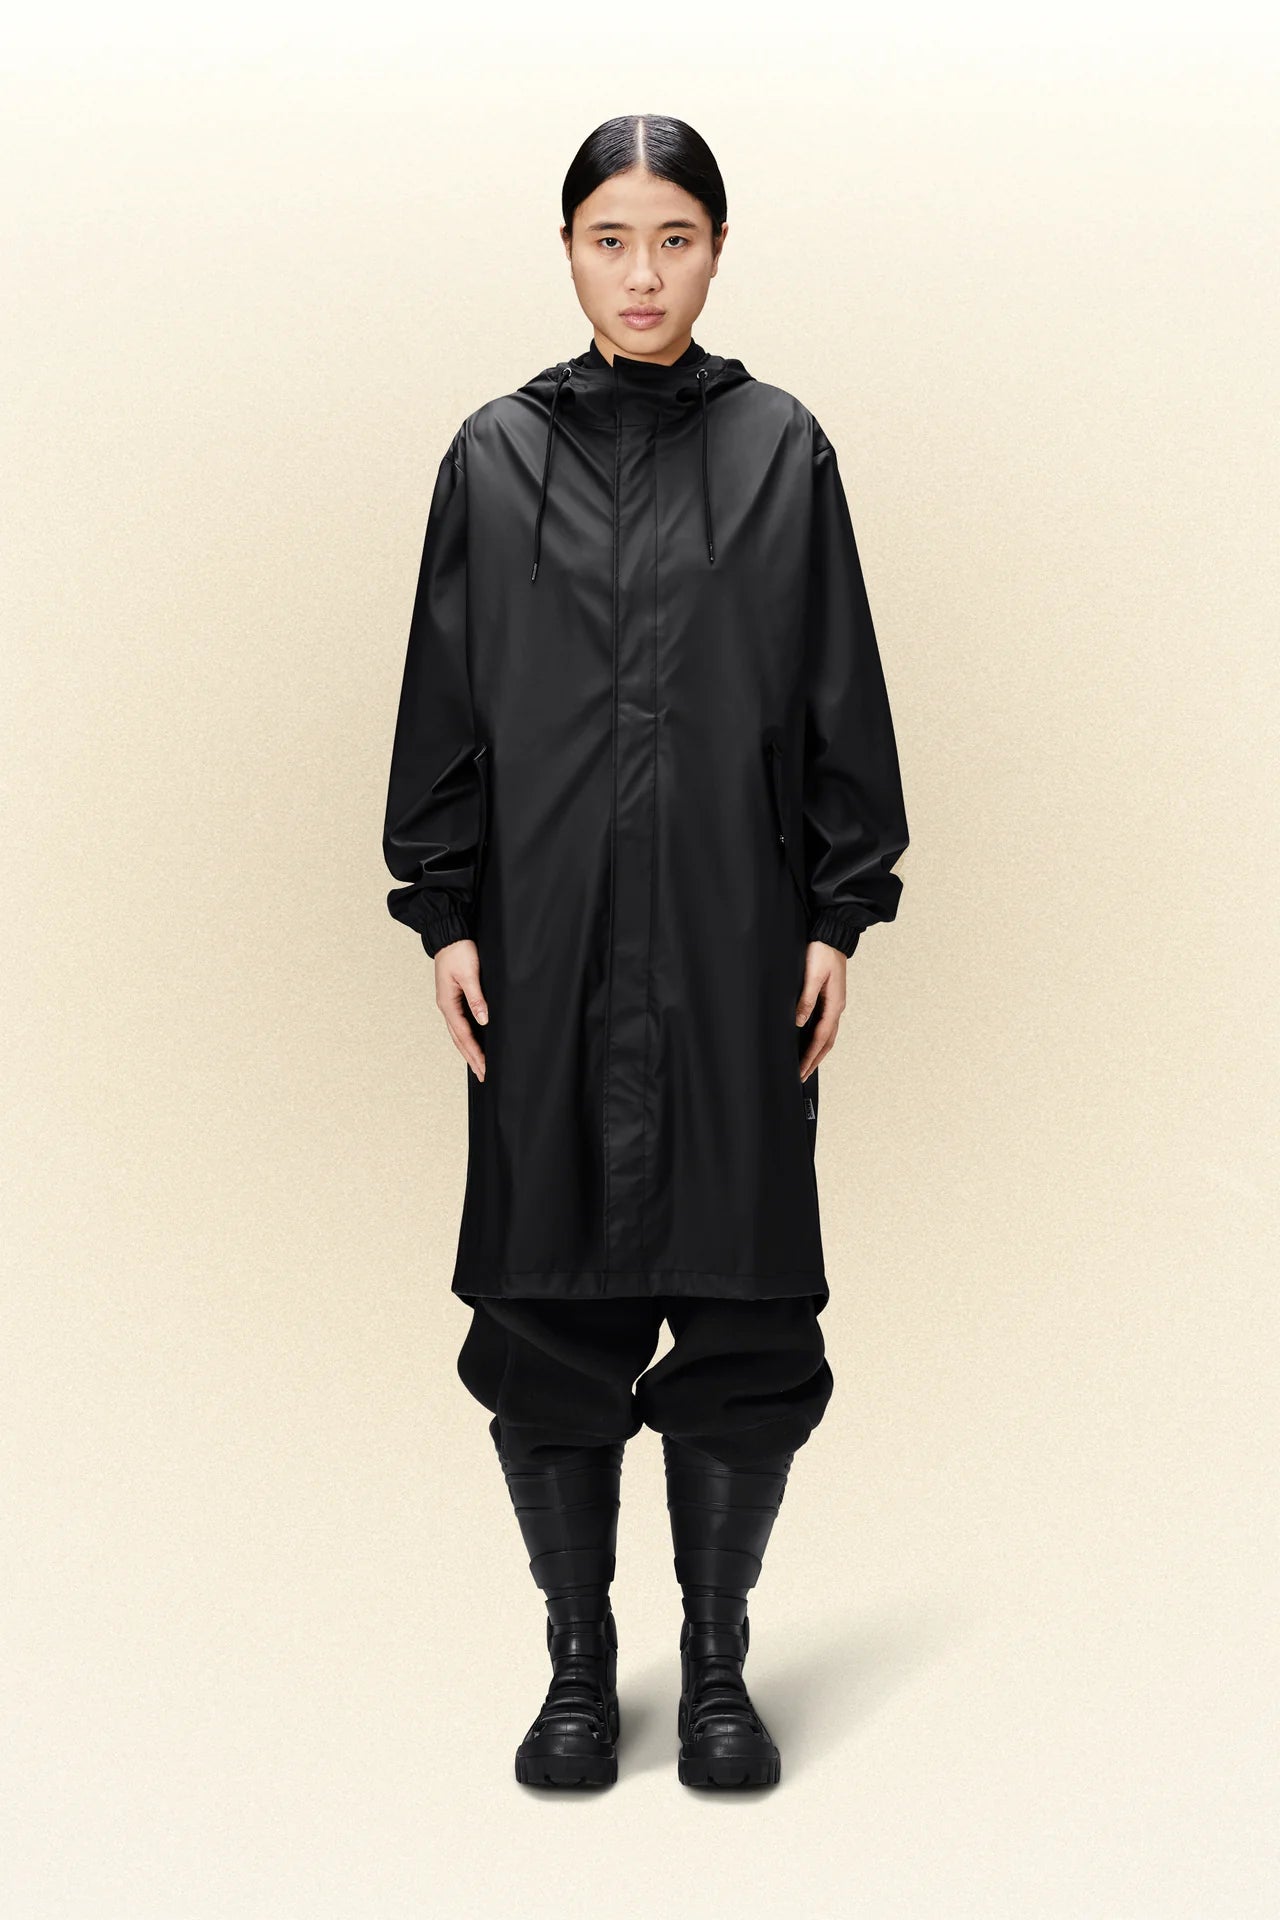 Description: A woman wearing a lightweight black Rains fishtail parka and waterproof boots.